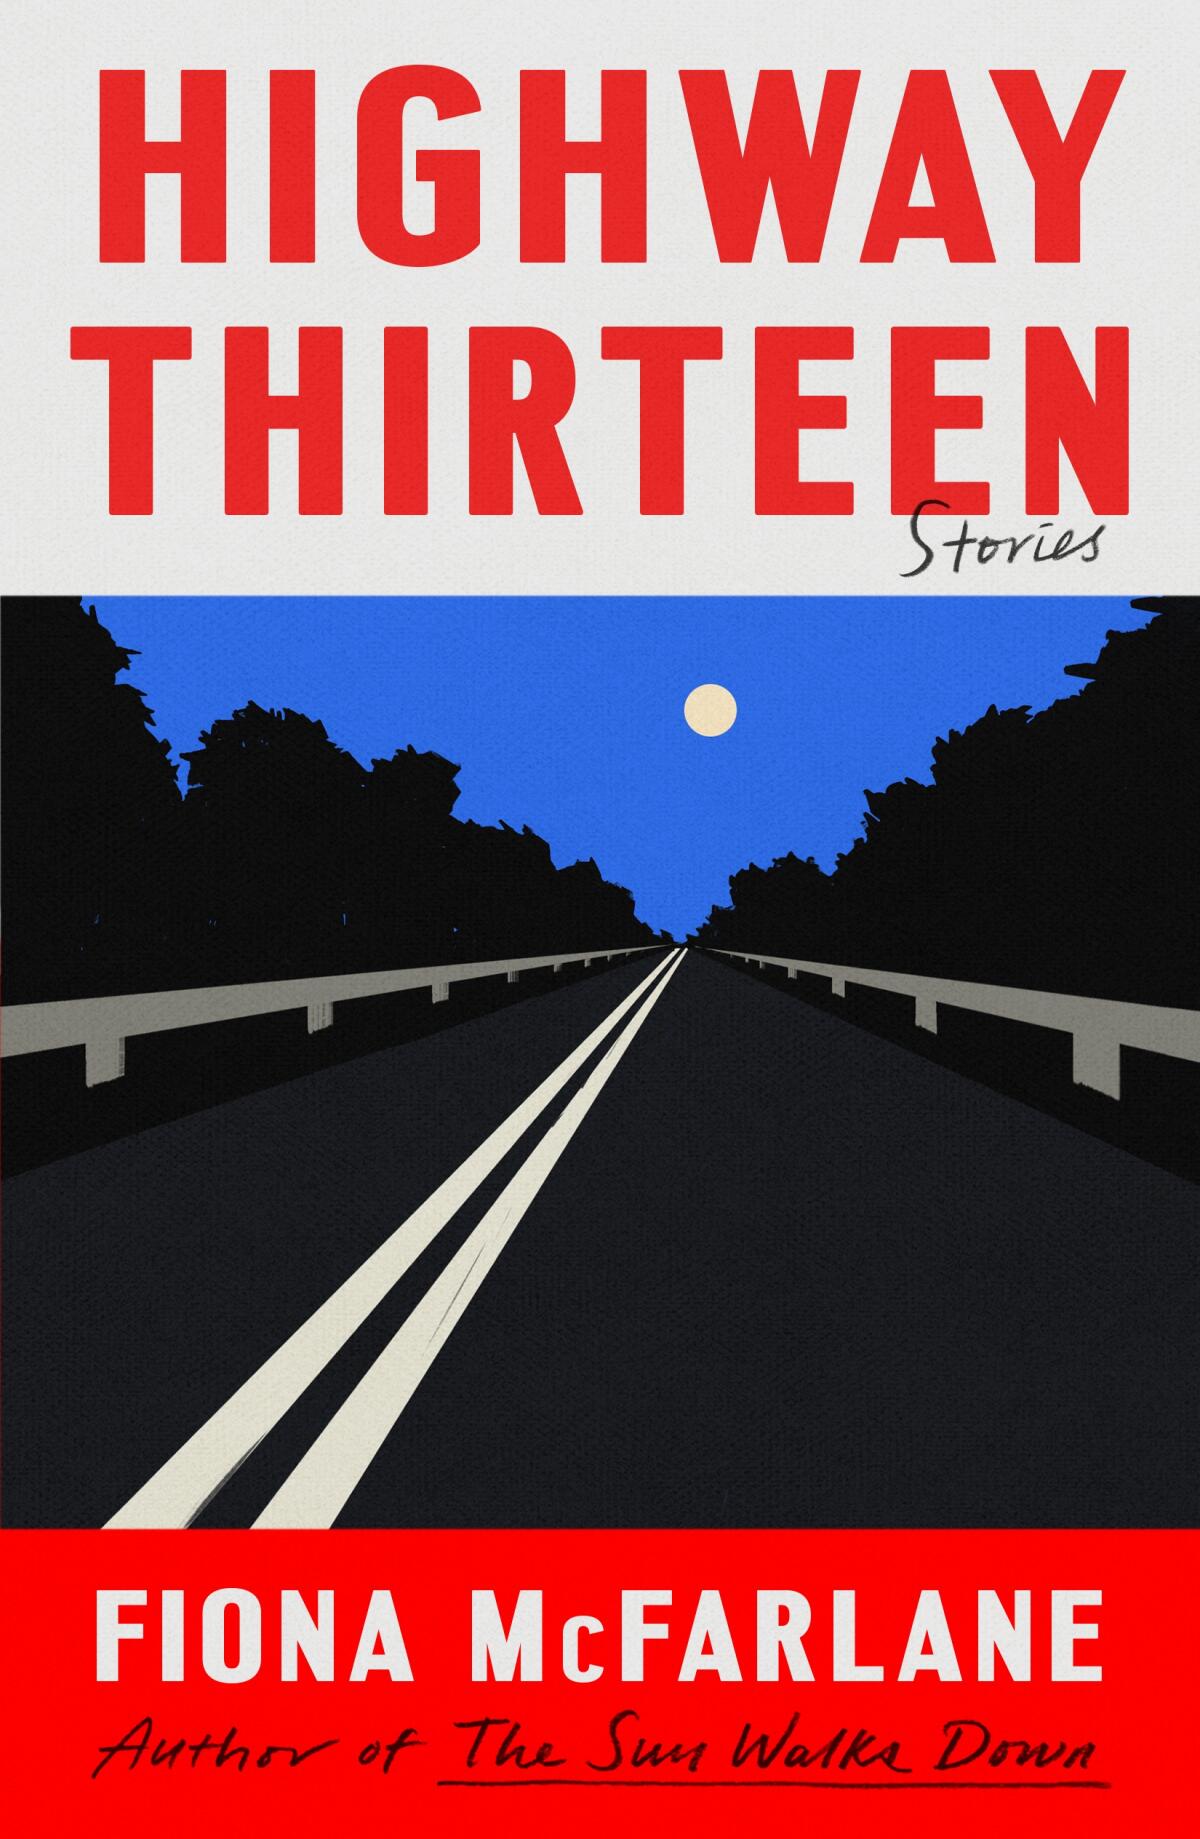 "Highway Thirteen" by Fiona McFarlane